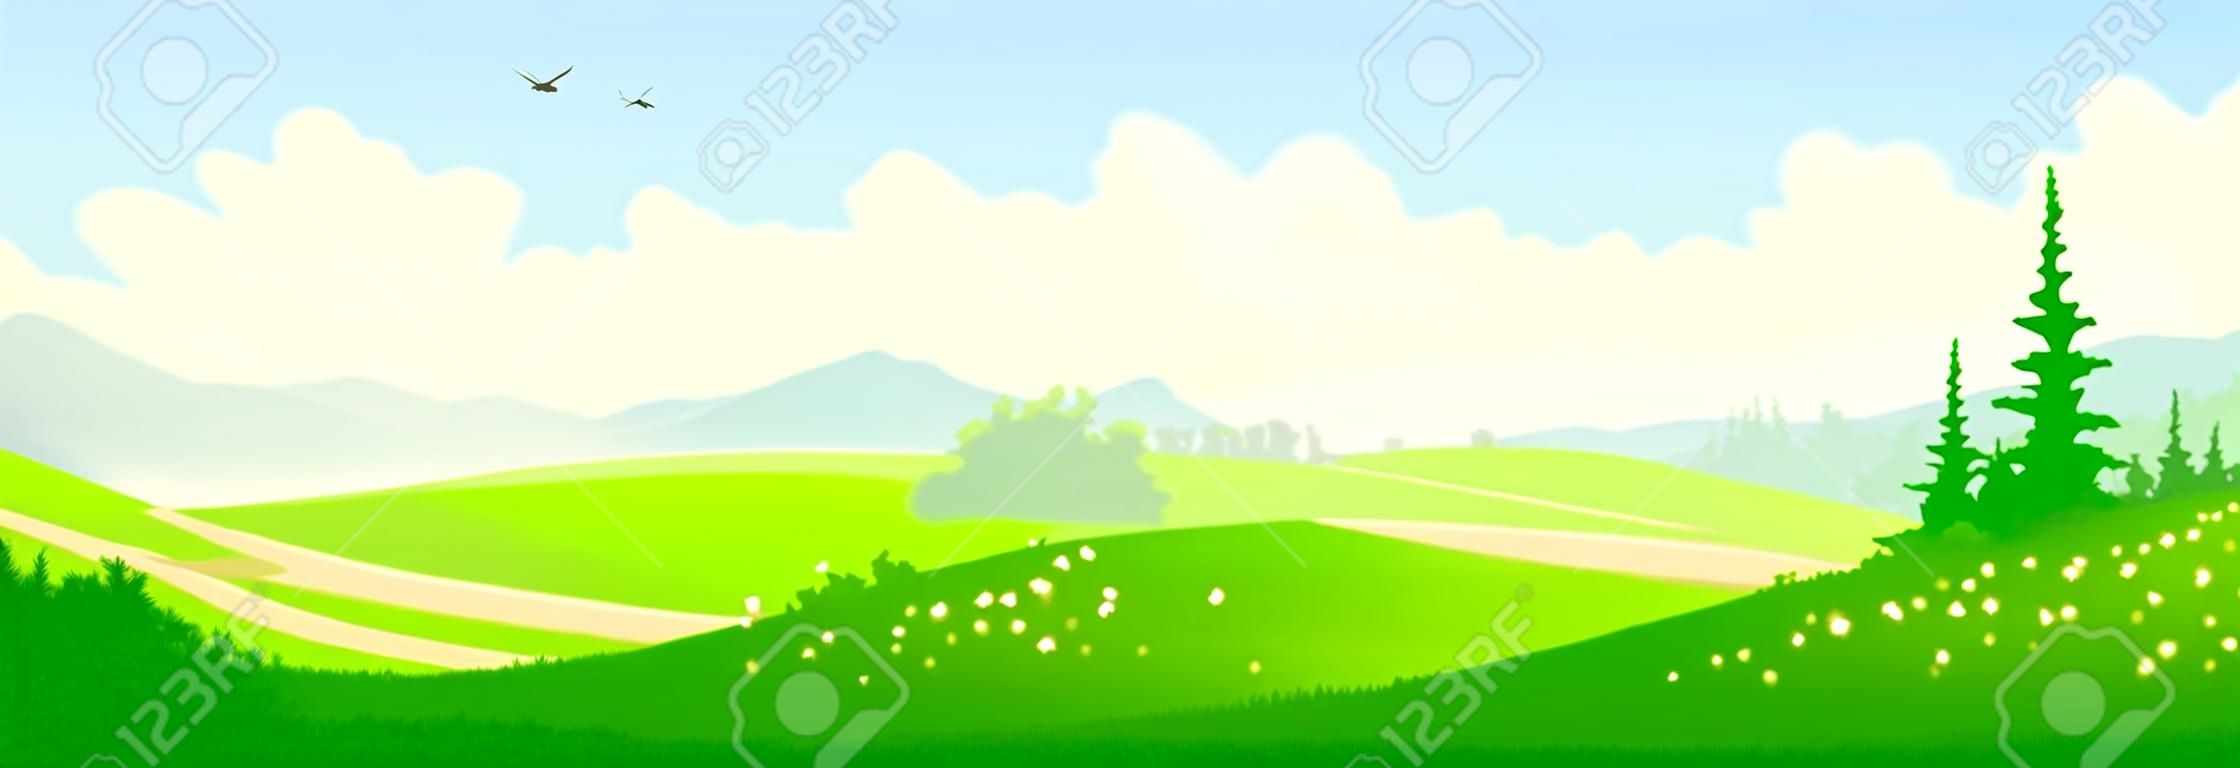 Vektor-Illustration der grünen Sommer Wald